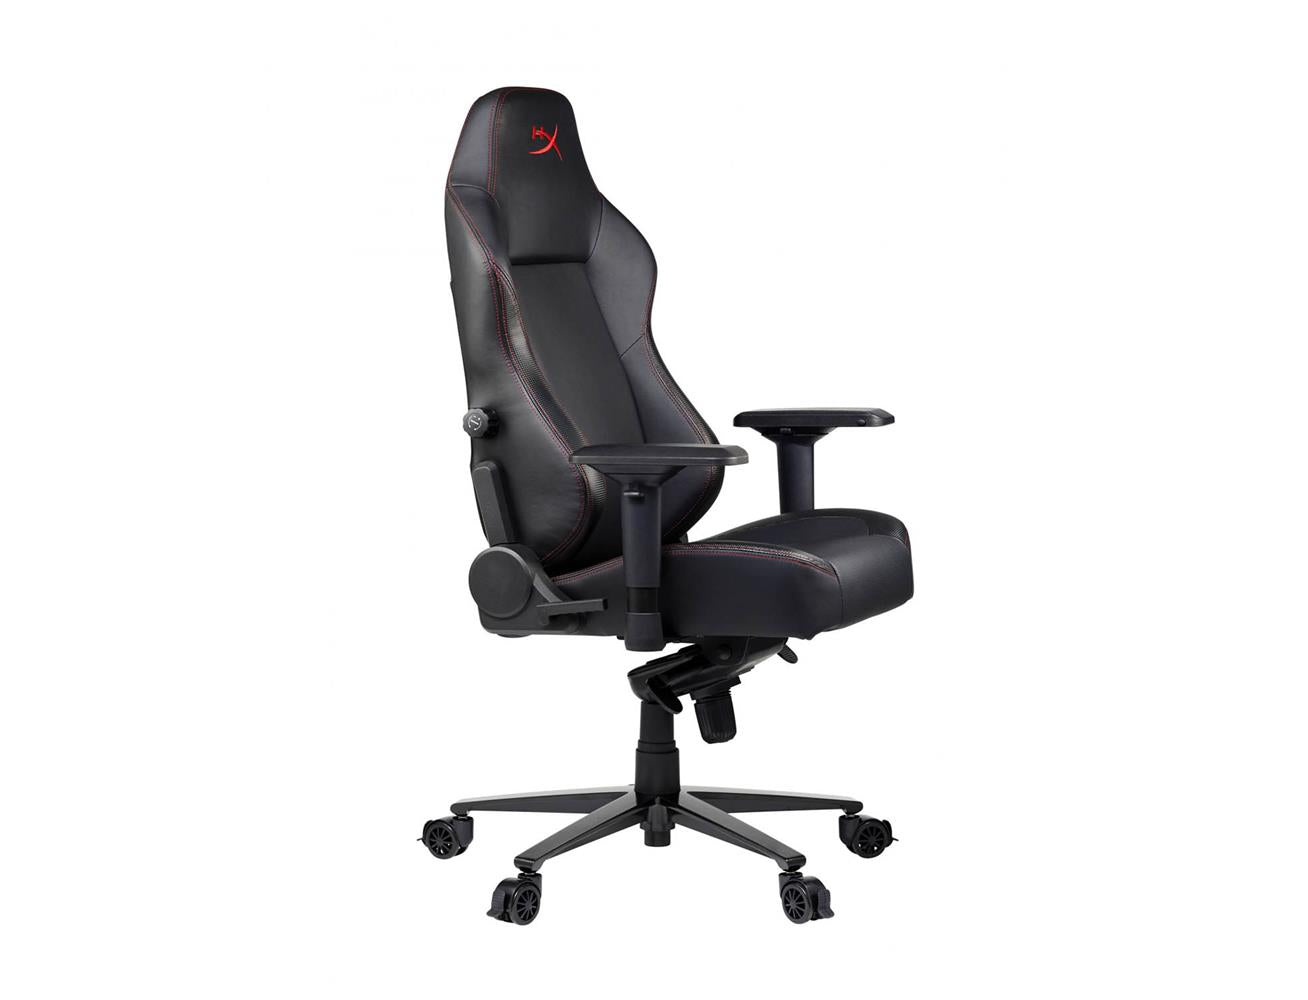 HyperX Stealth Gaming Chair